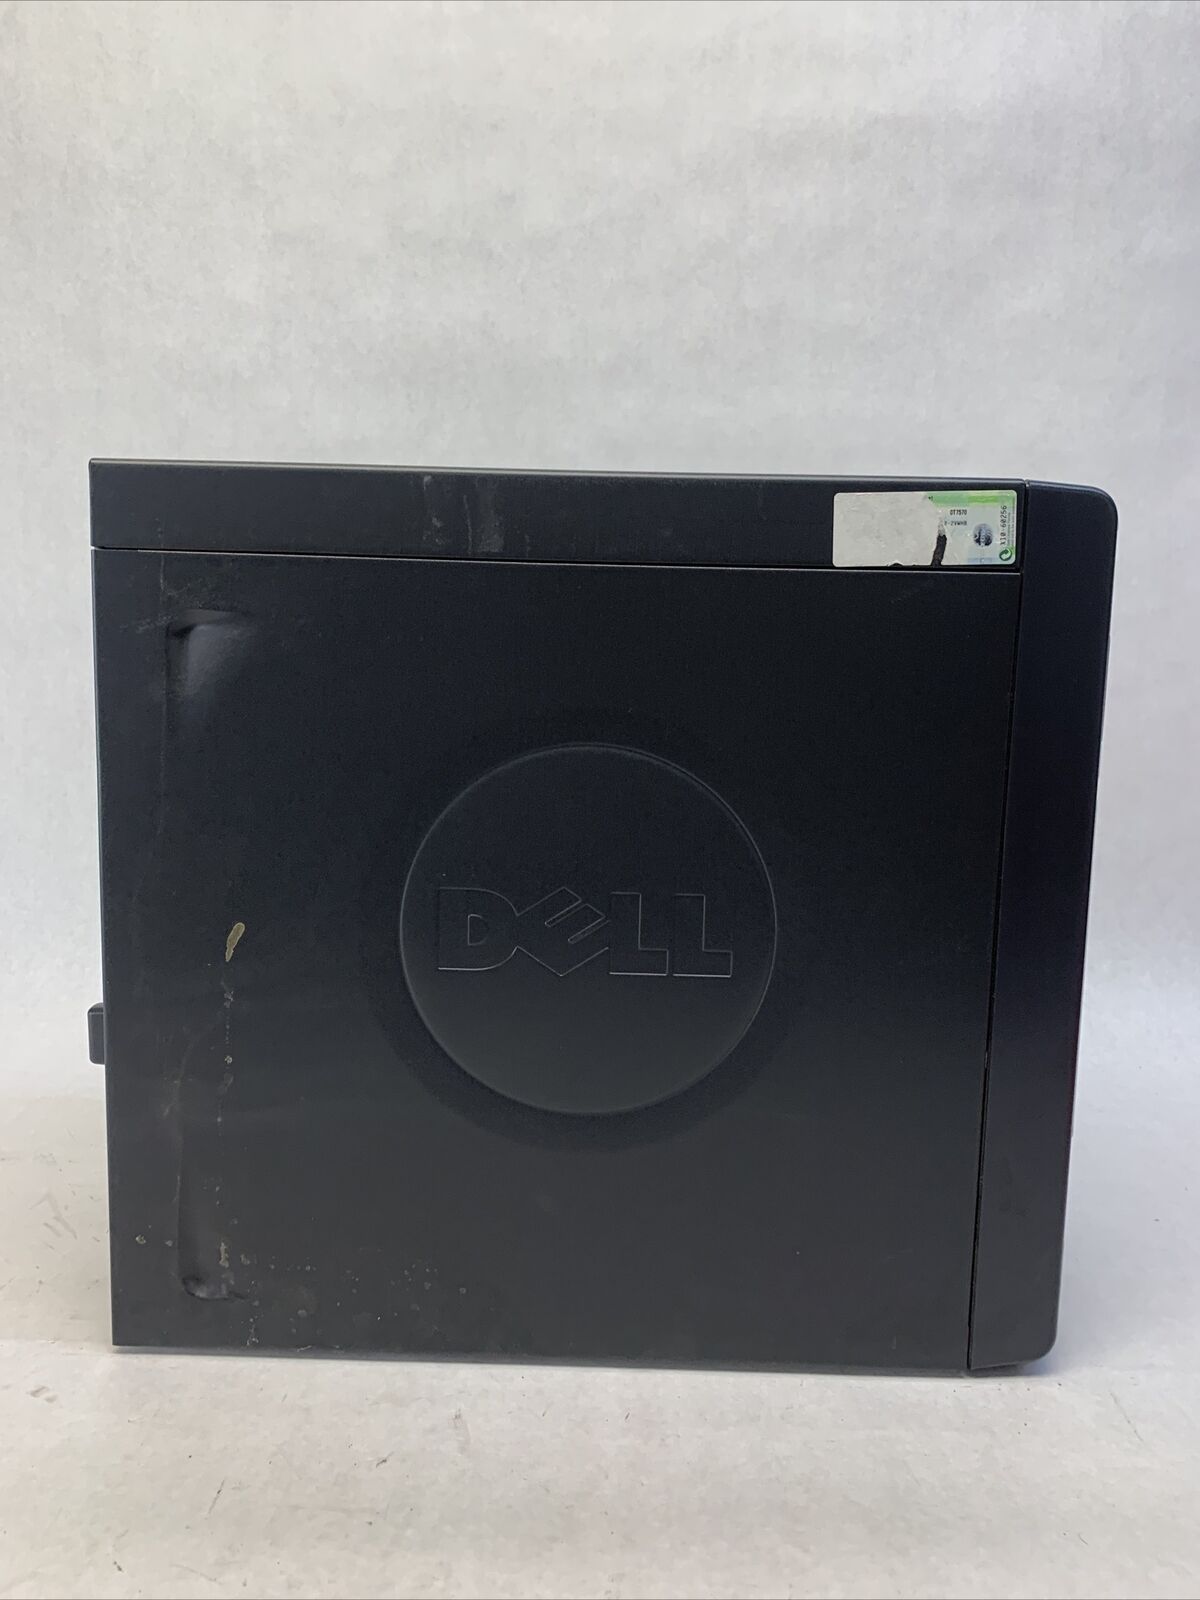 Dell Dimension 3000 MT Intel Pentium 4 2.8GHz 512MB RAM No HDD No OS